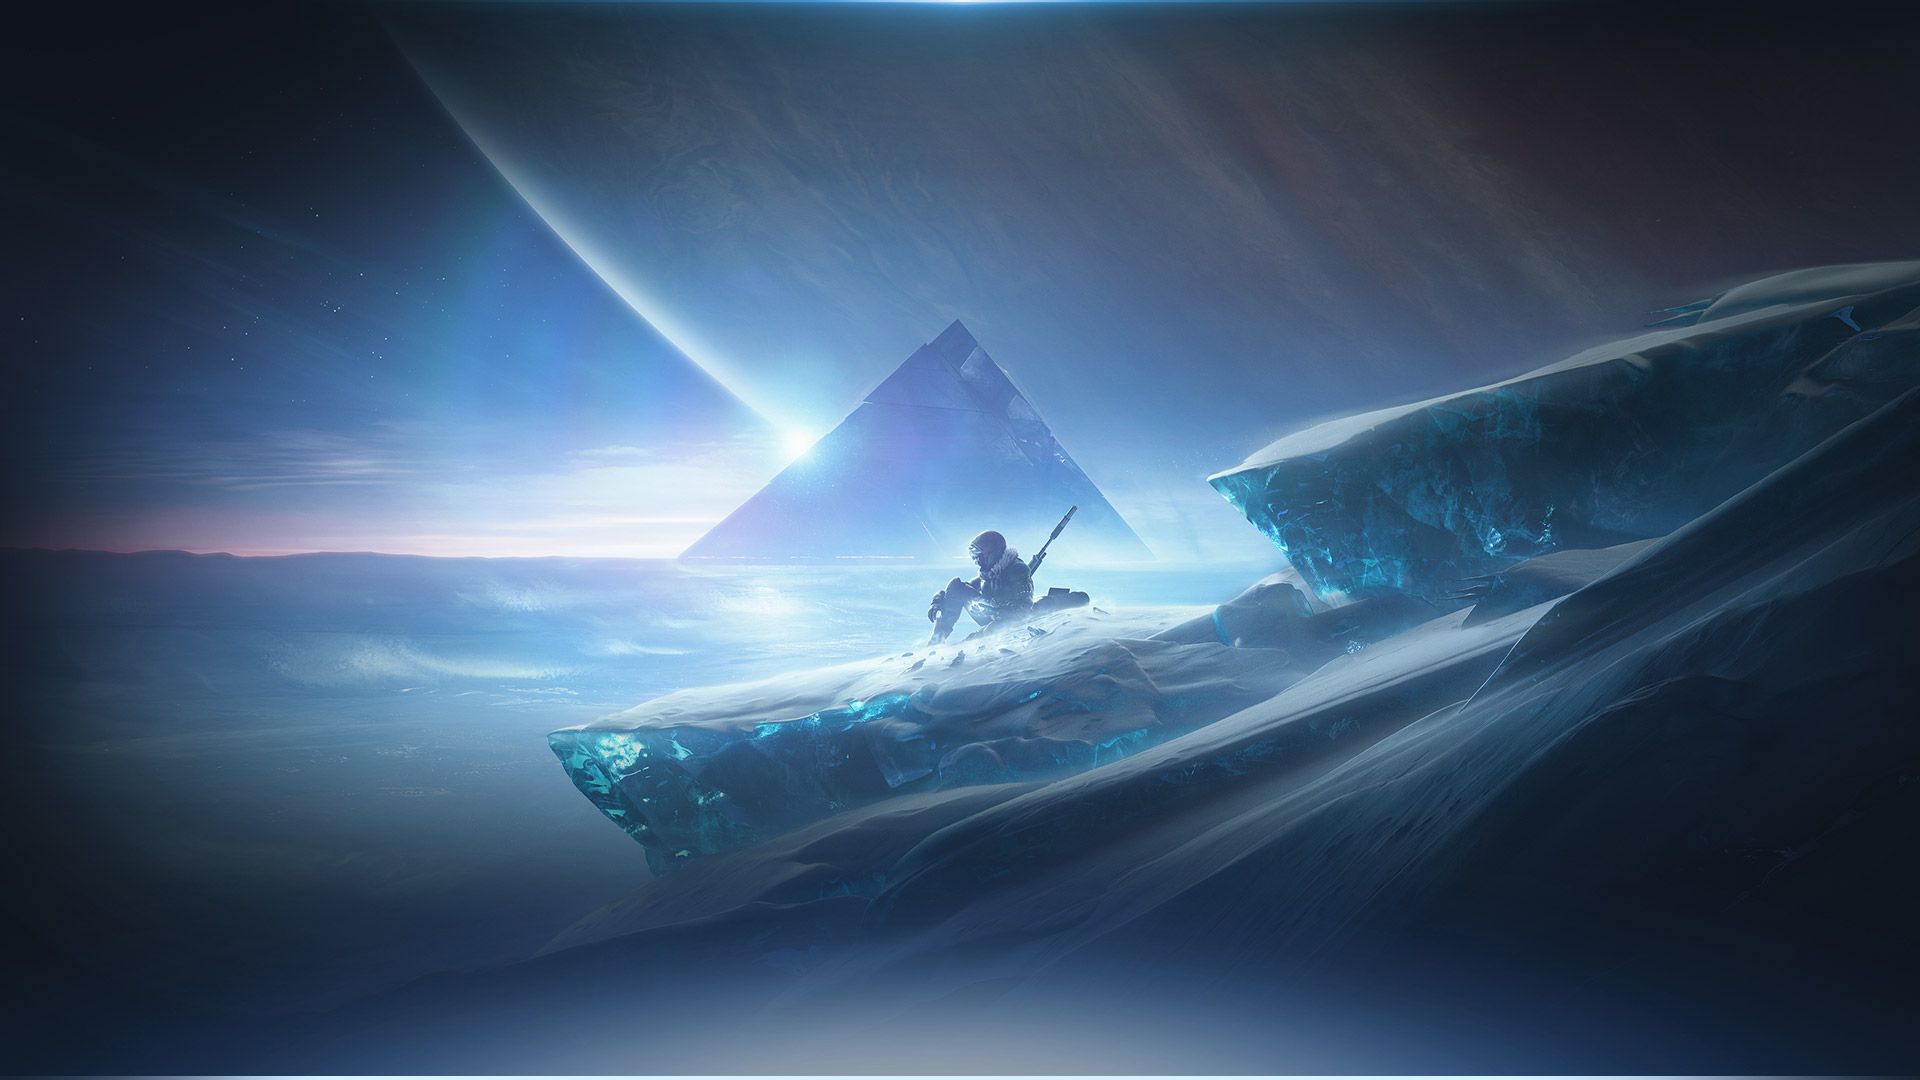 Destiny 2: Beyond Light release date delayed